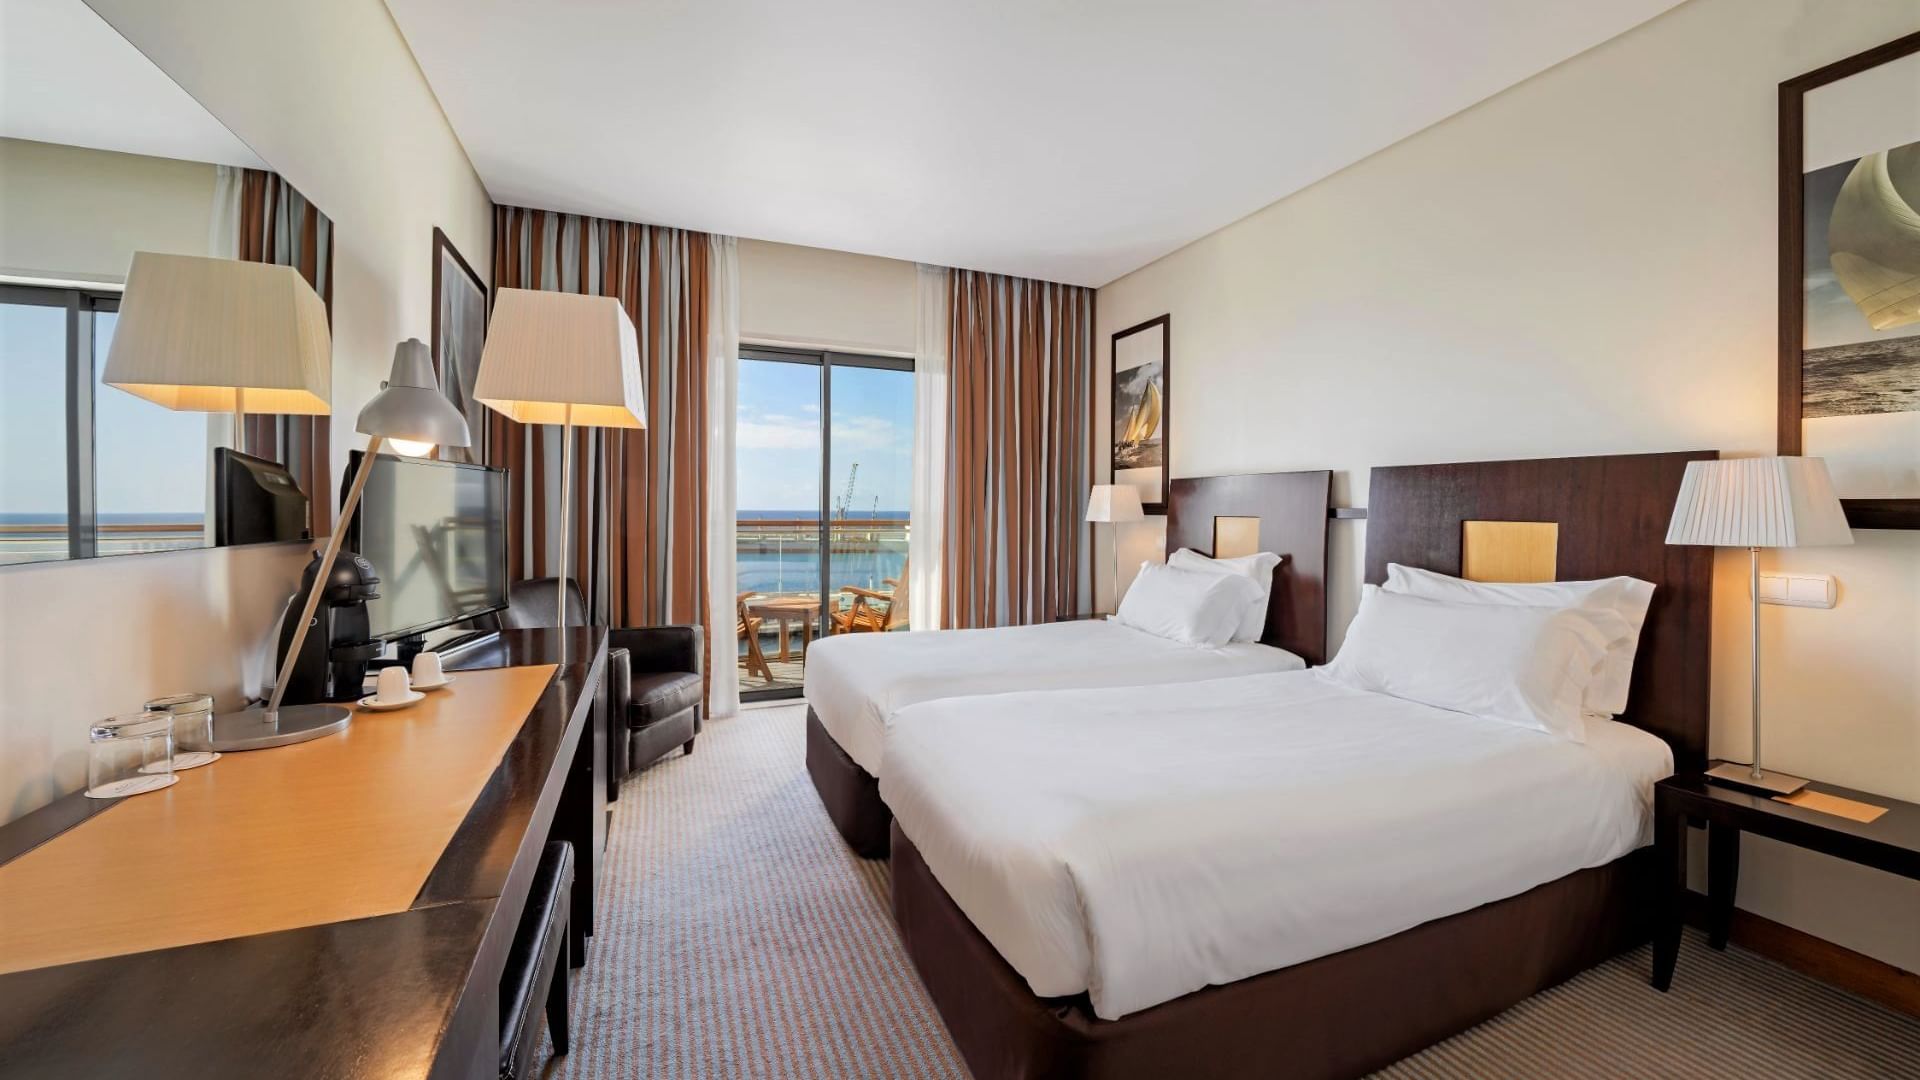 Beds in Executive Ocean View Twin Suite at Bensaude Hotels